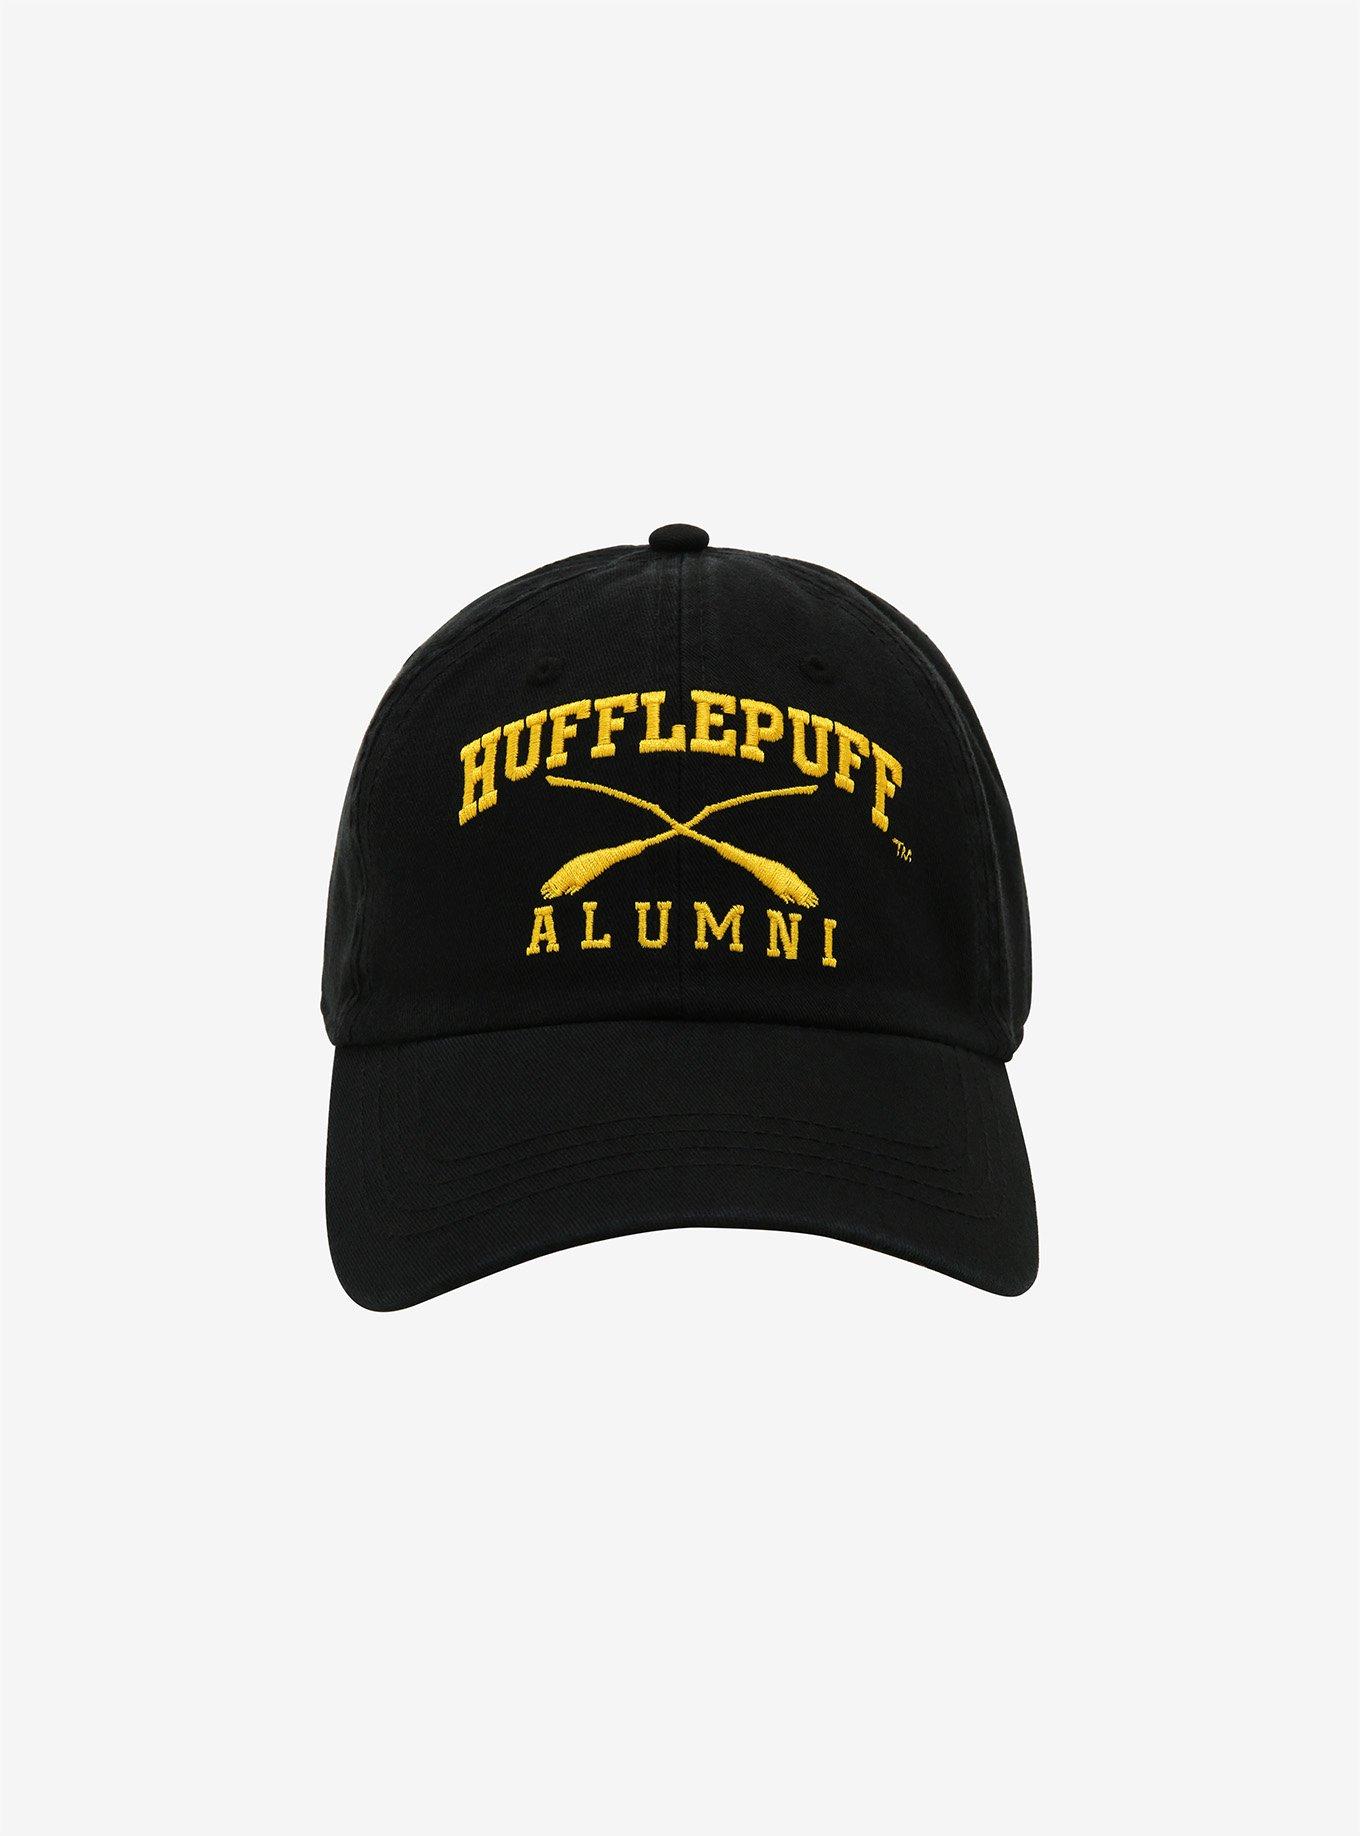 BoxLunch Cap | Harry Alumni Potter Hufflepuff BoxLunch - Exclusive